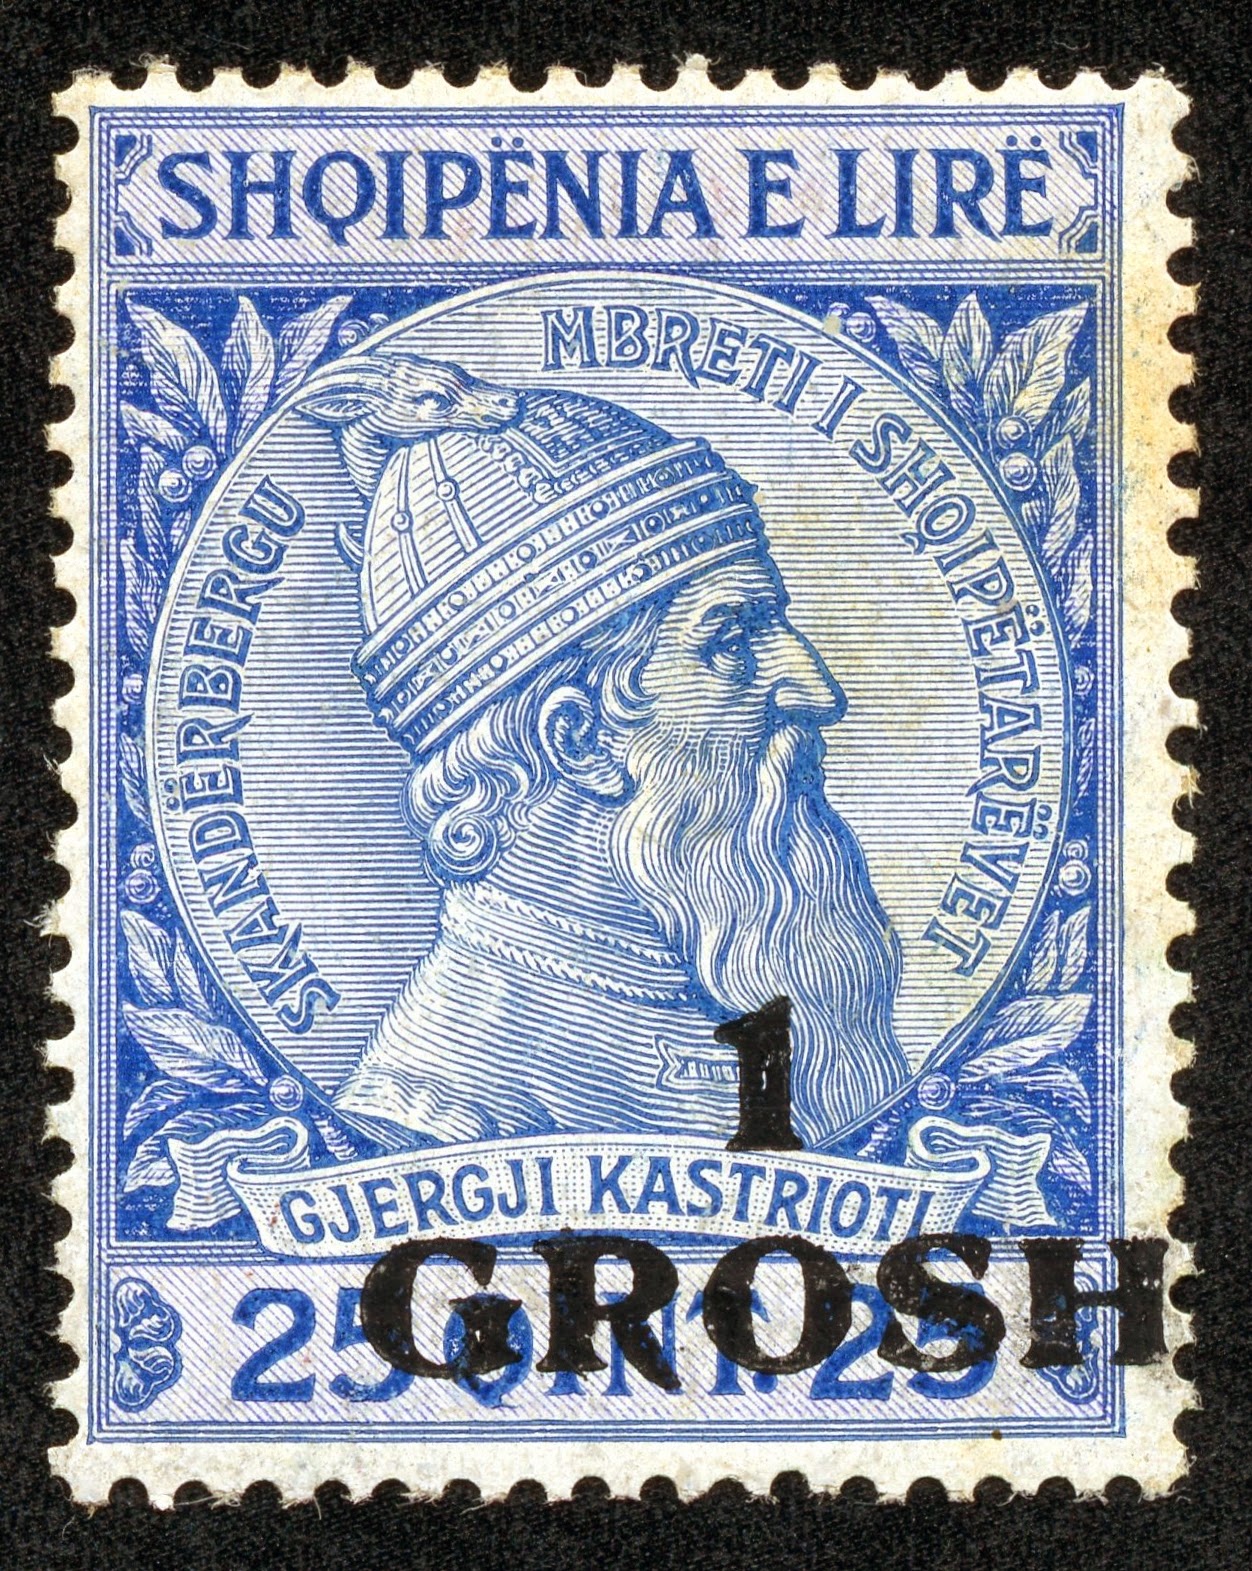 Albania Eurphila International Stamps Exposition in Roma 1984 U